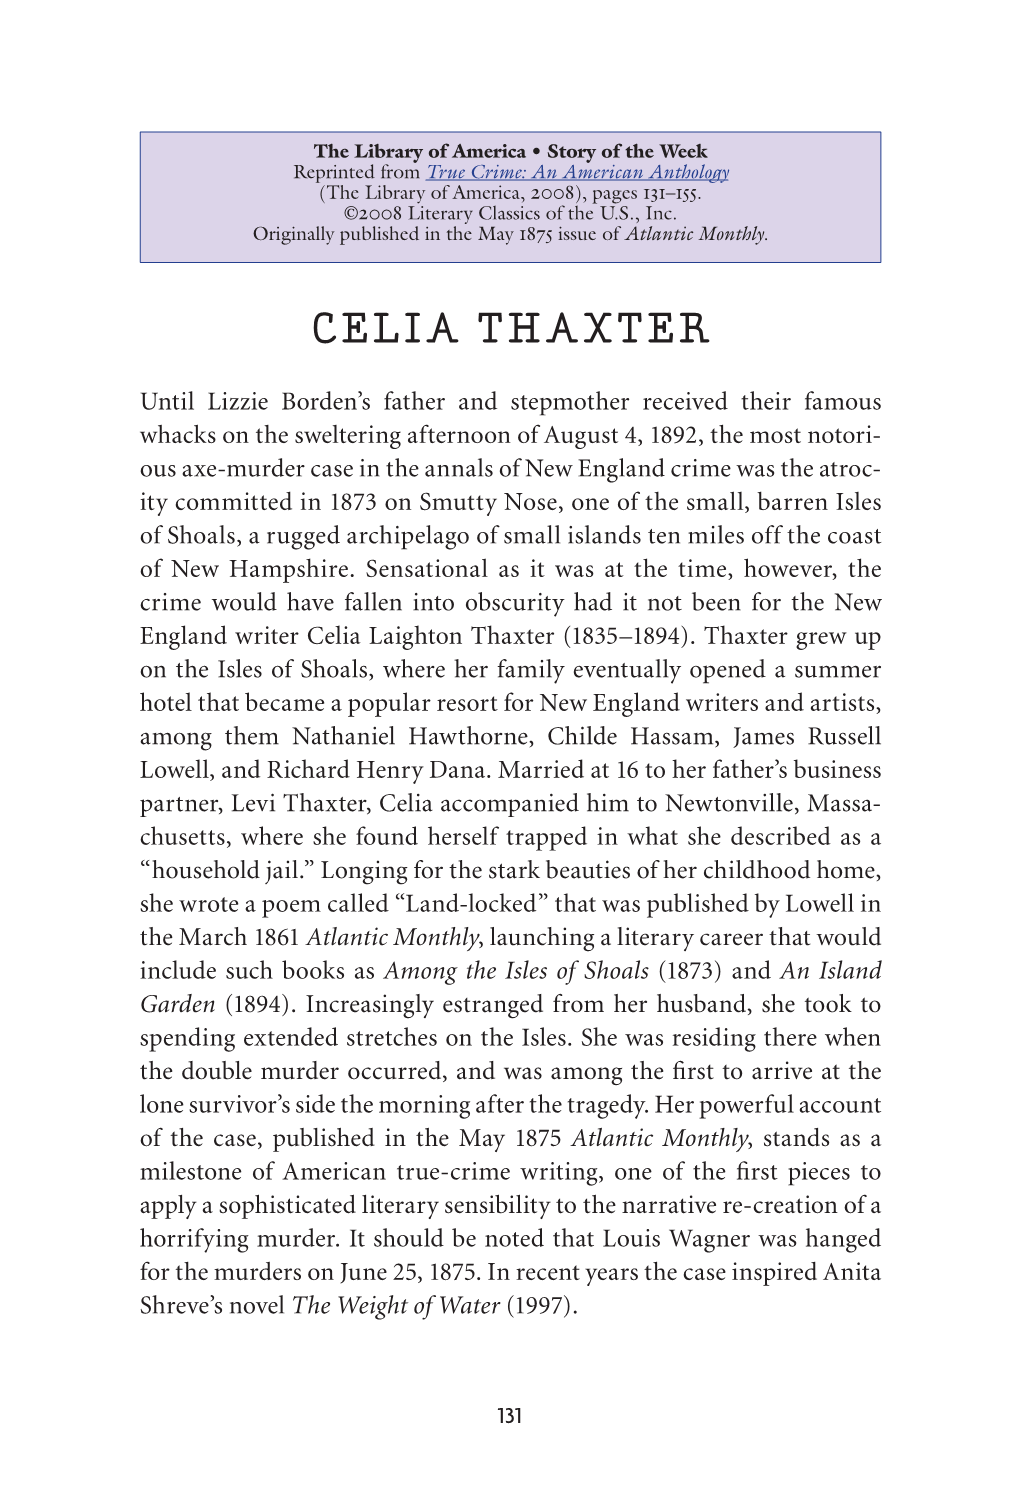 Celia Thaxter: a Memorable Murder